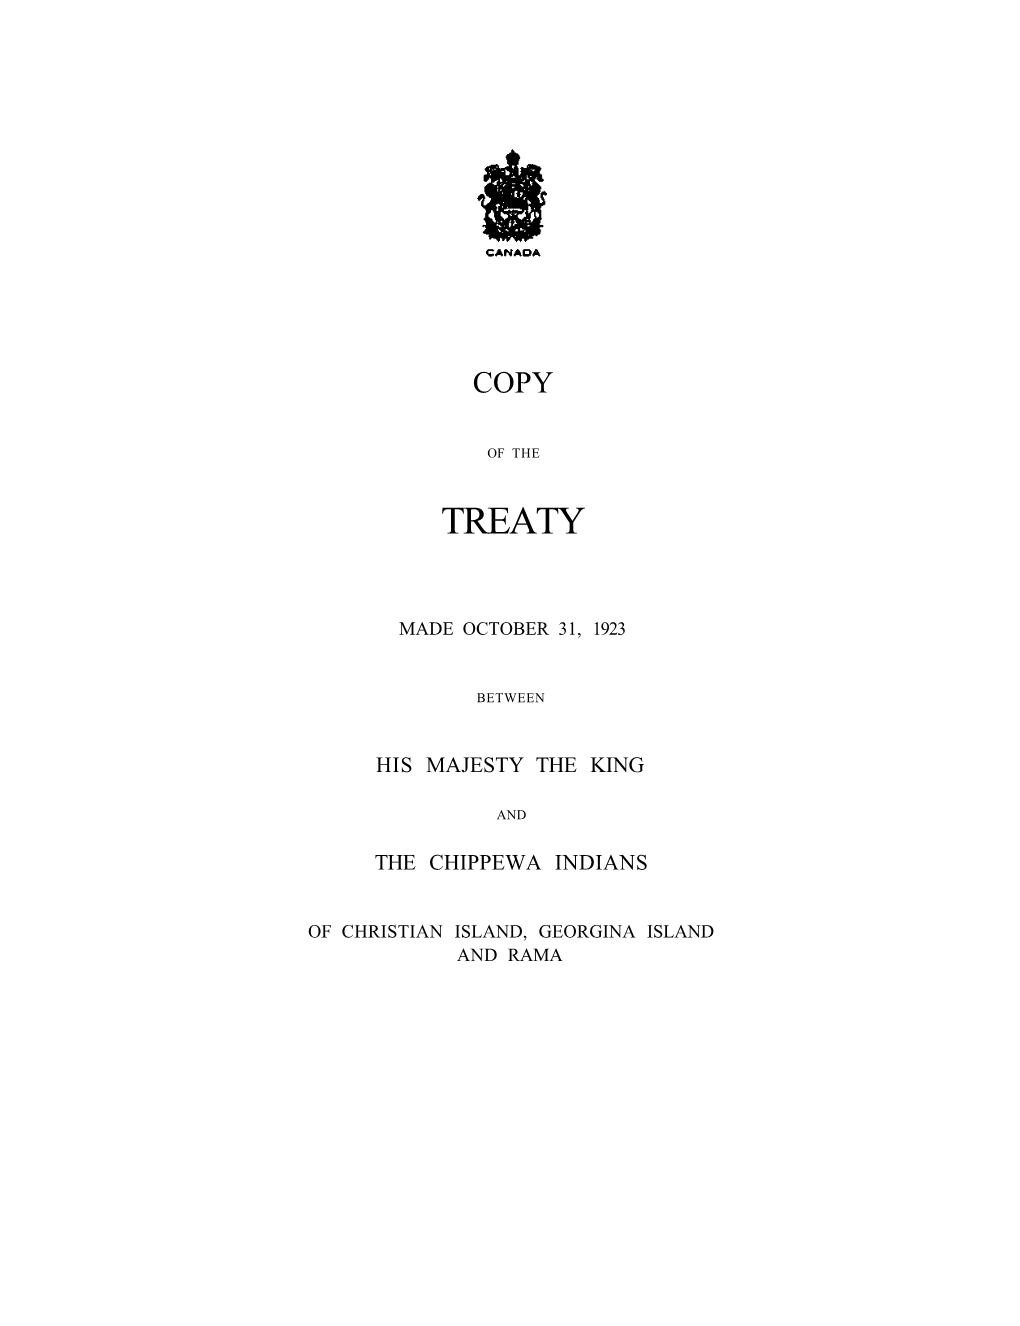 Treaty of October 31 1923